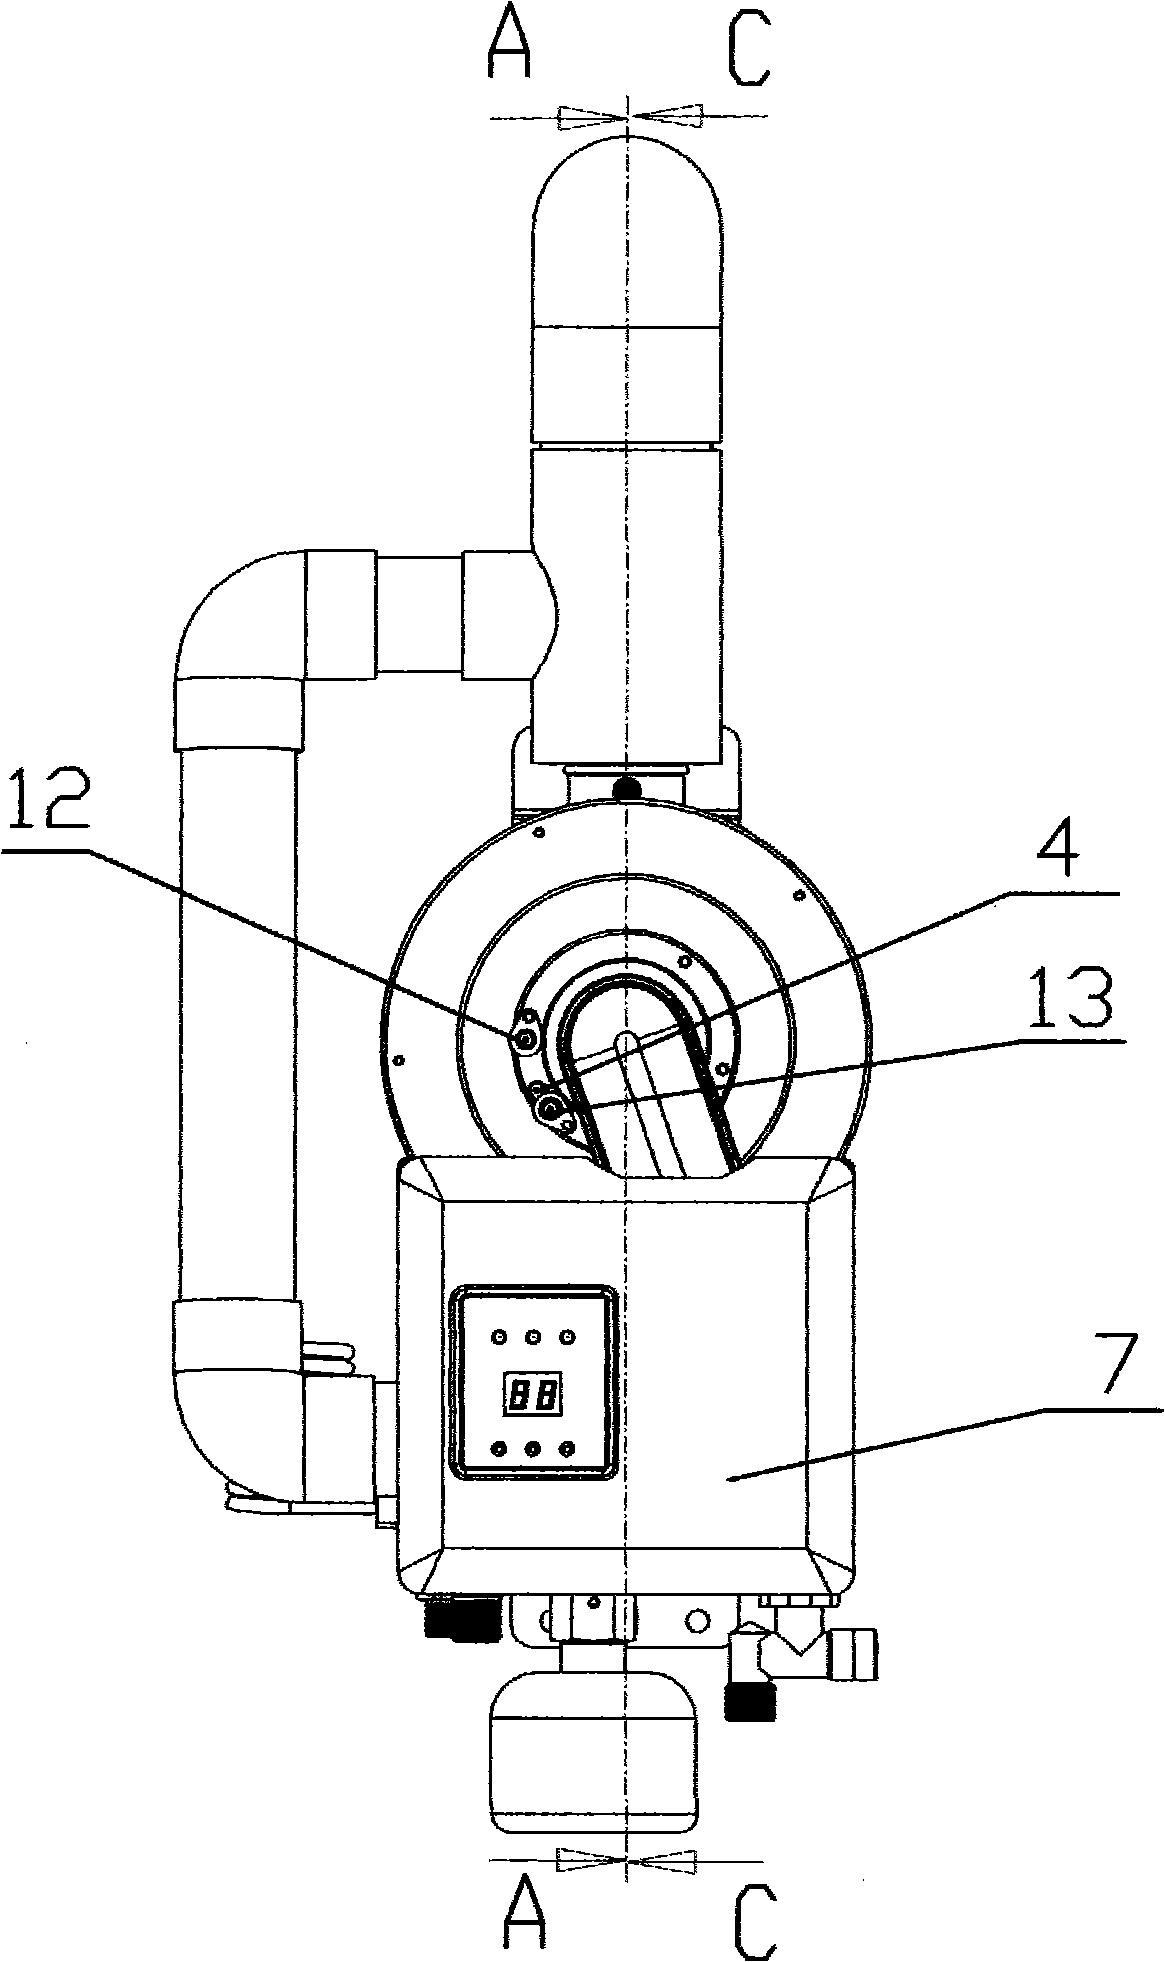 Condensing type gas water heater